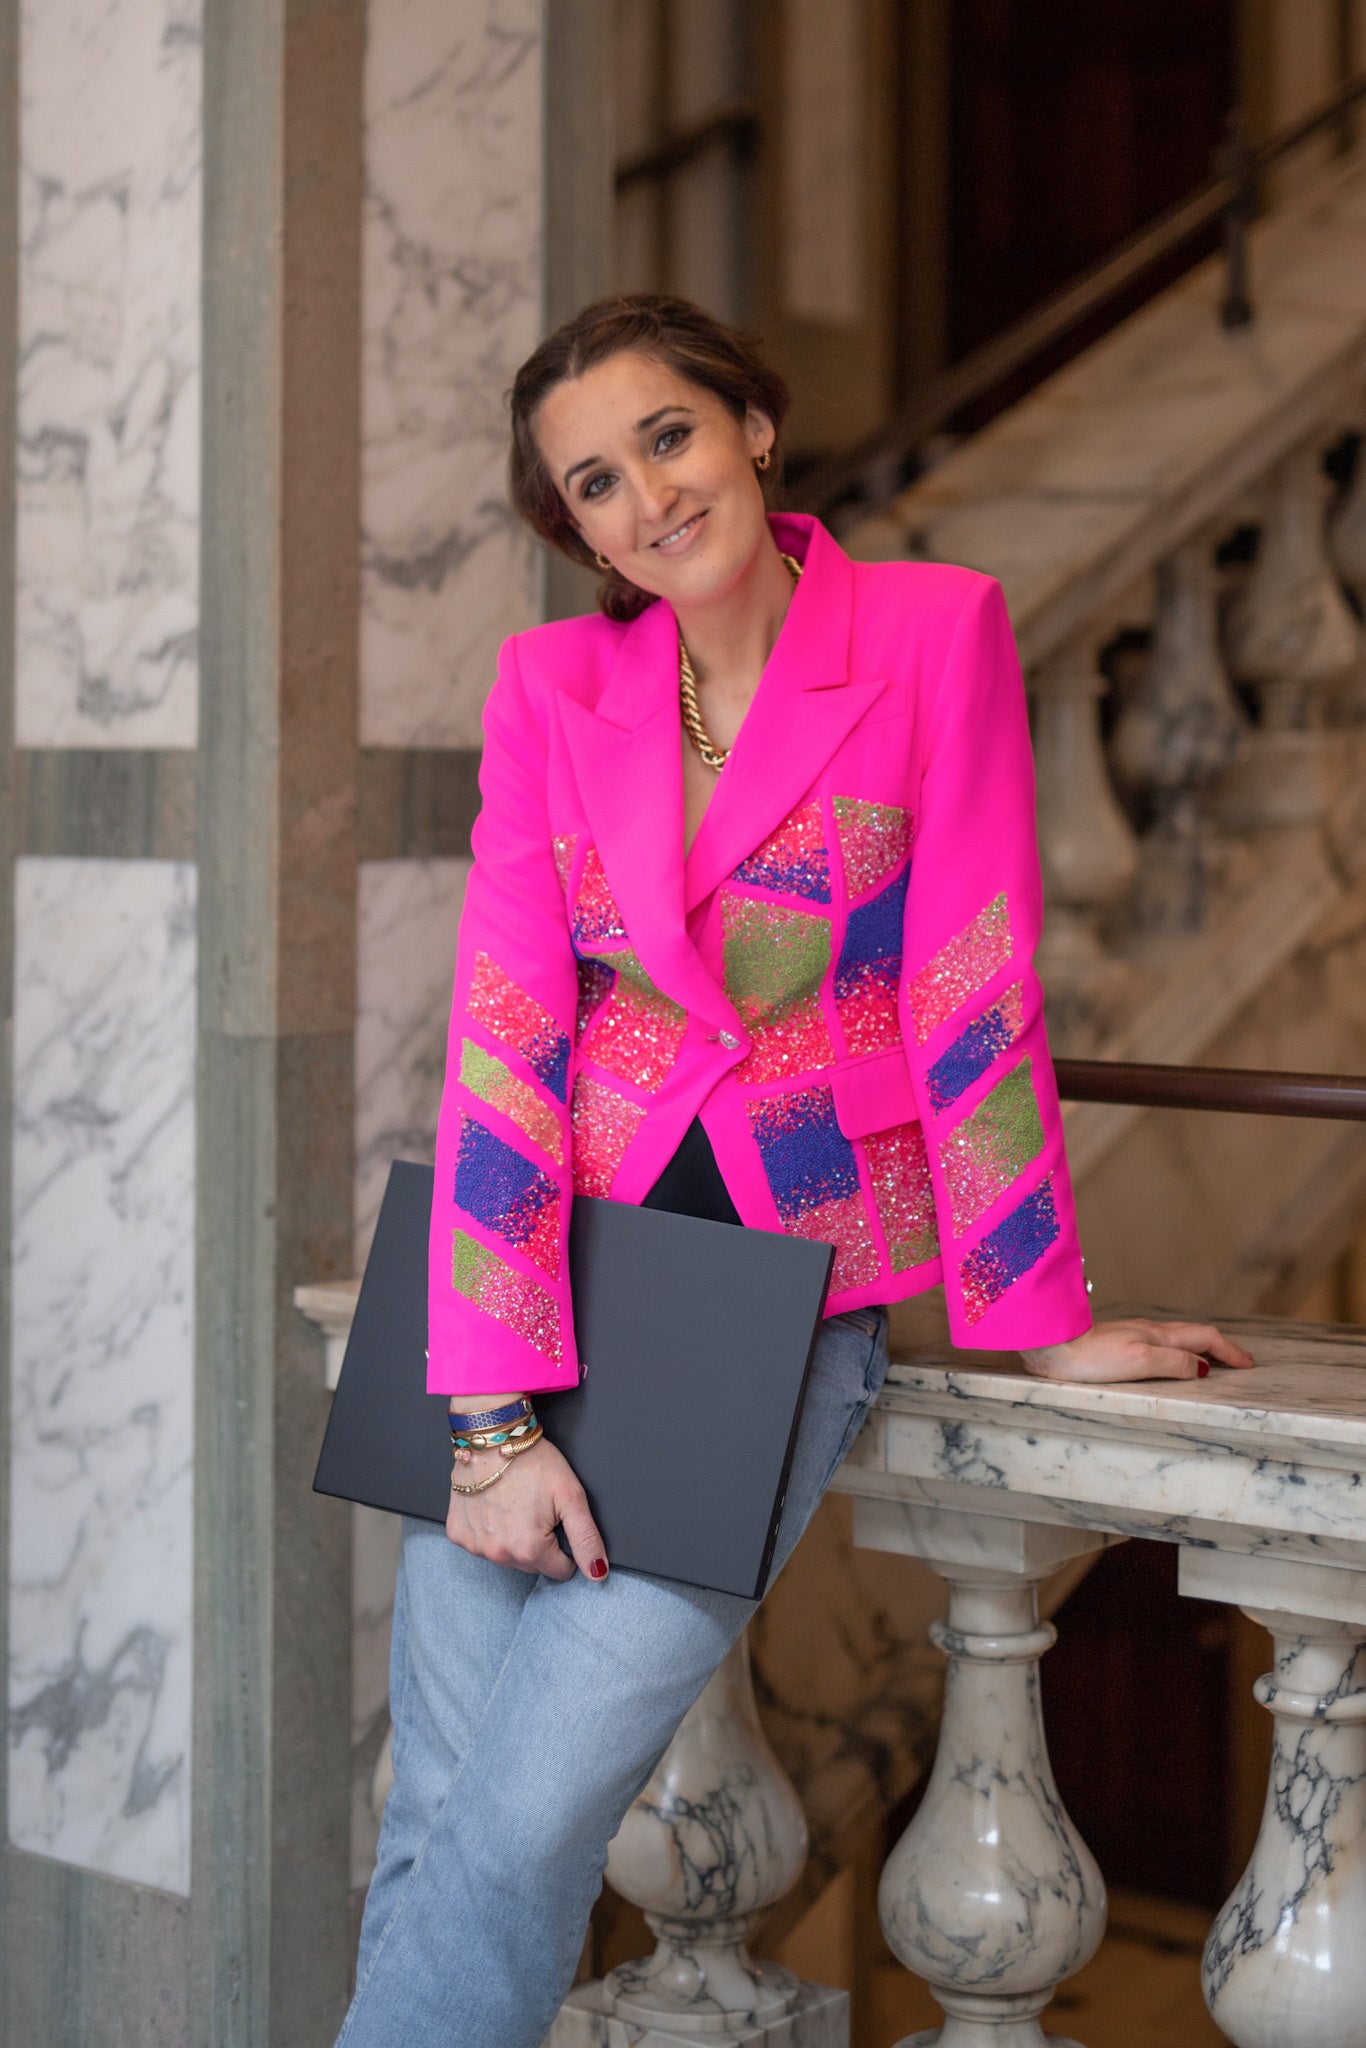 Rosanna Falconer in pink blazer holding laptop